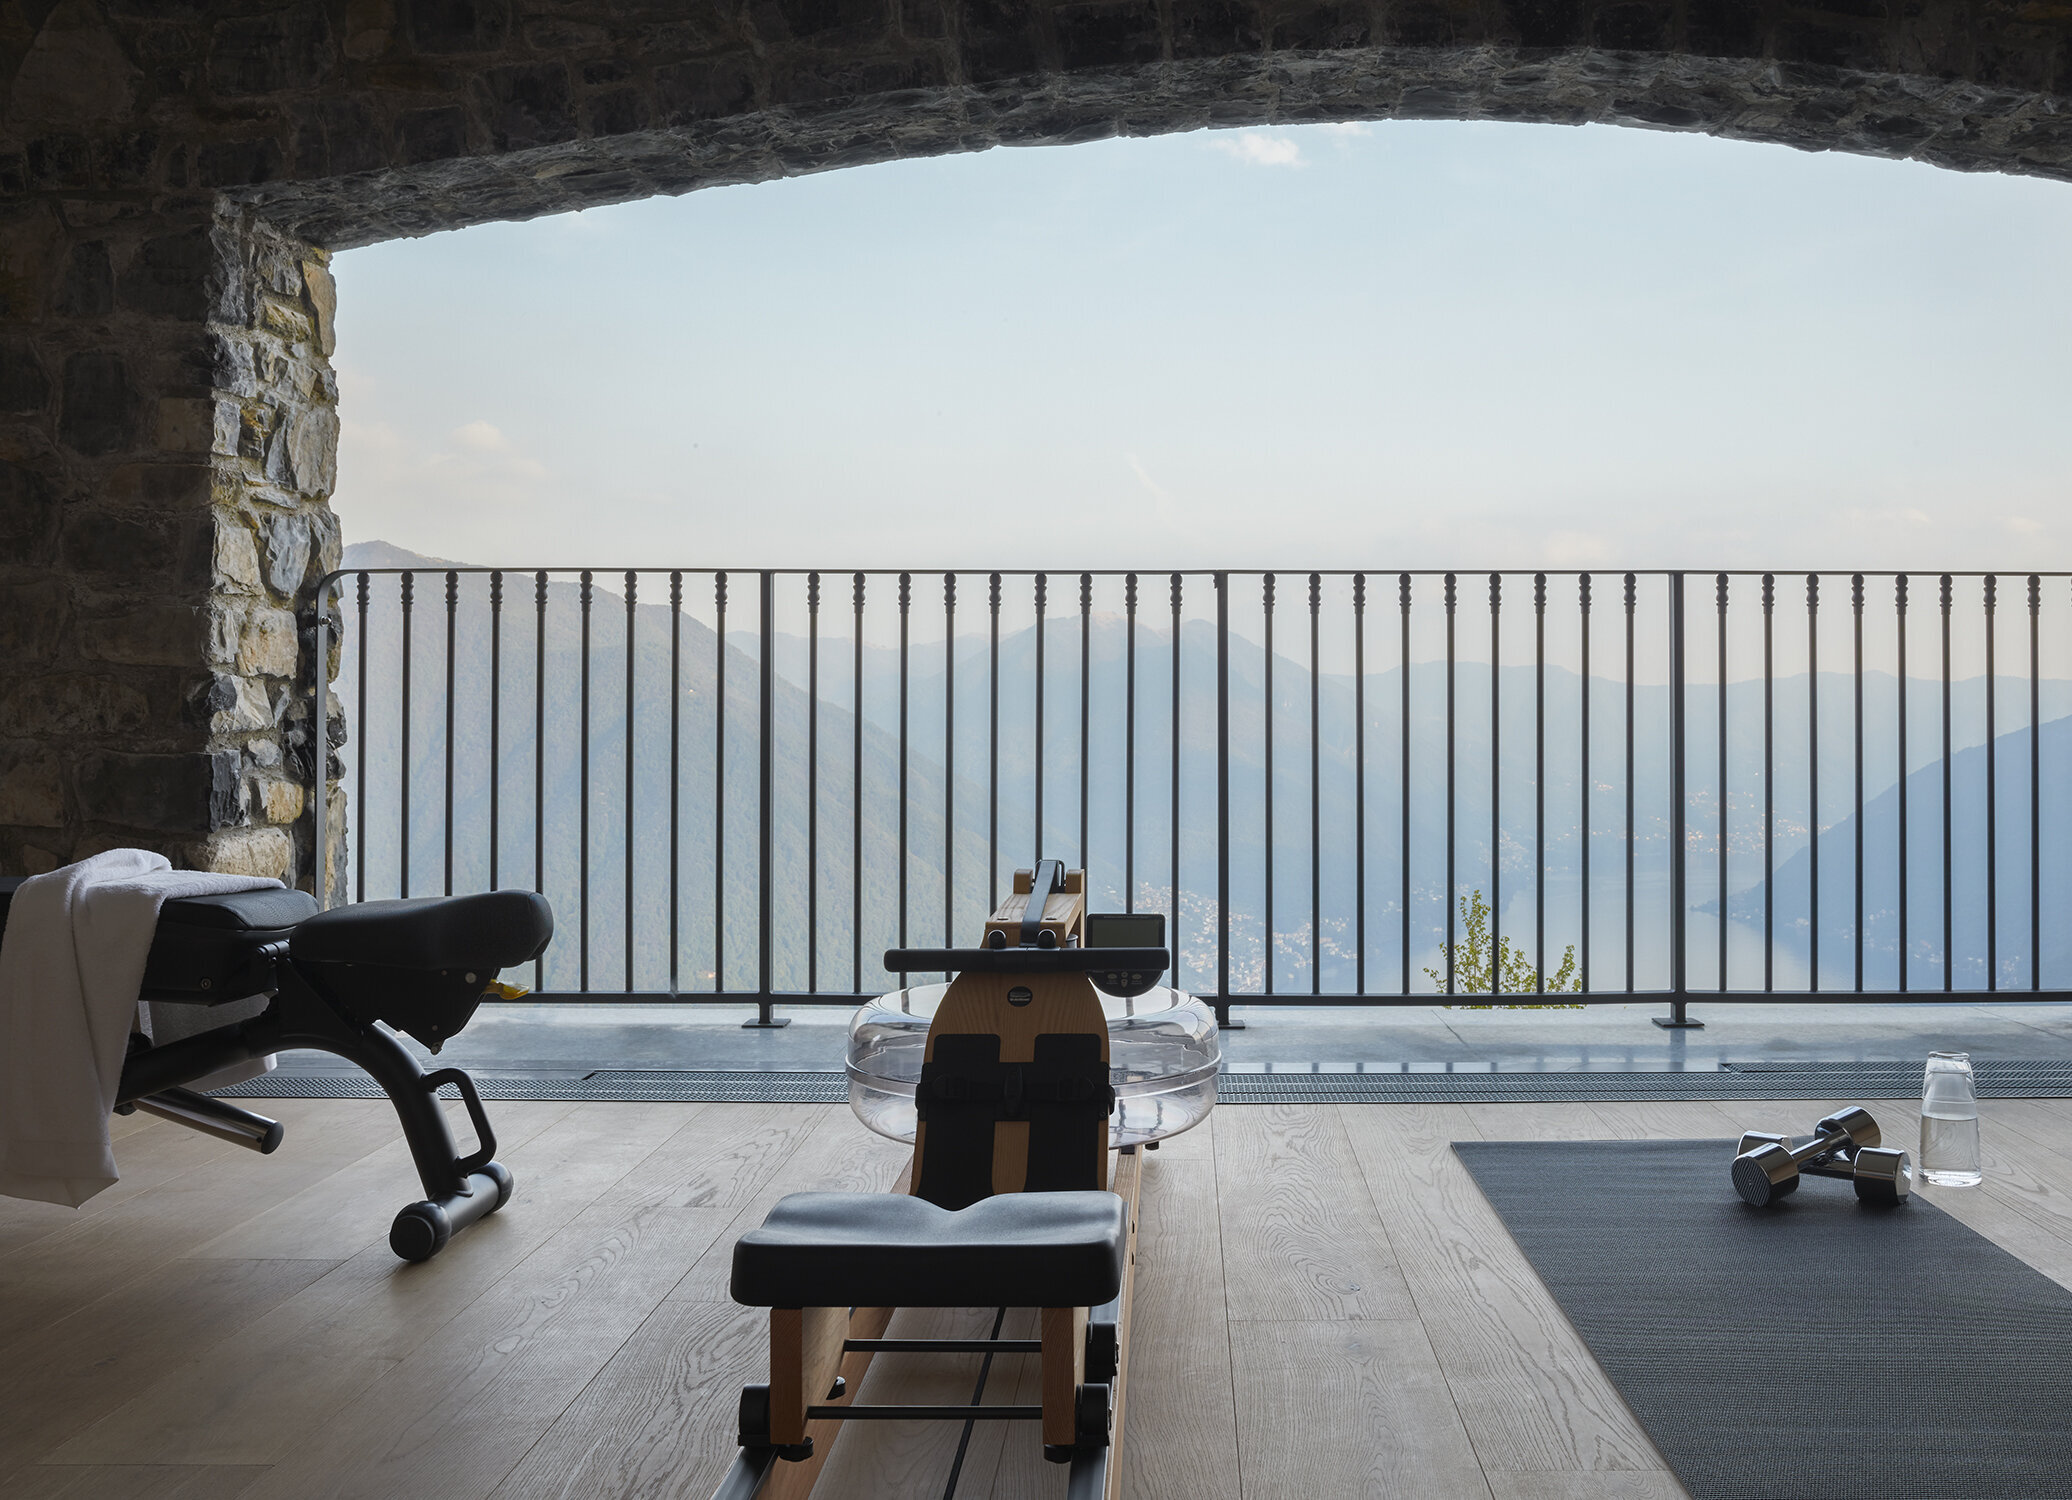 Francis York Villa Peduzzi is the Ultimate Luxury Vacation Home on Lake Como2.jpg